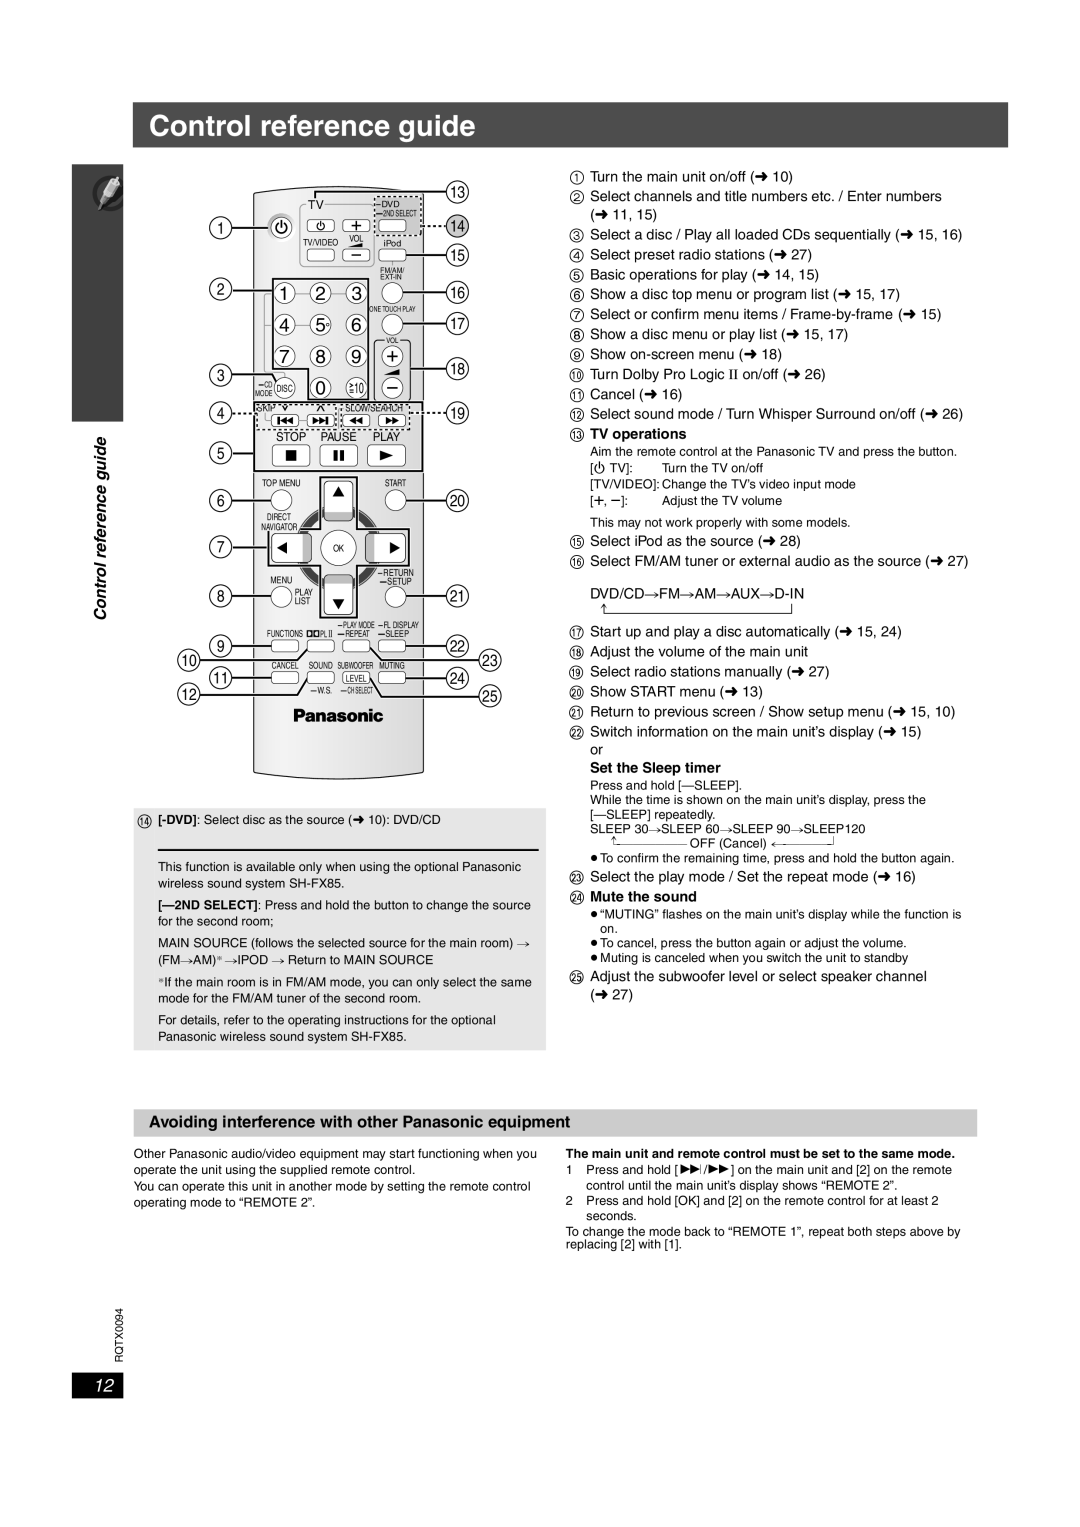 Panasonic SC-PT660, SC-PT754 manual Control reference guide 